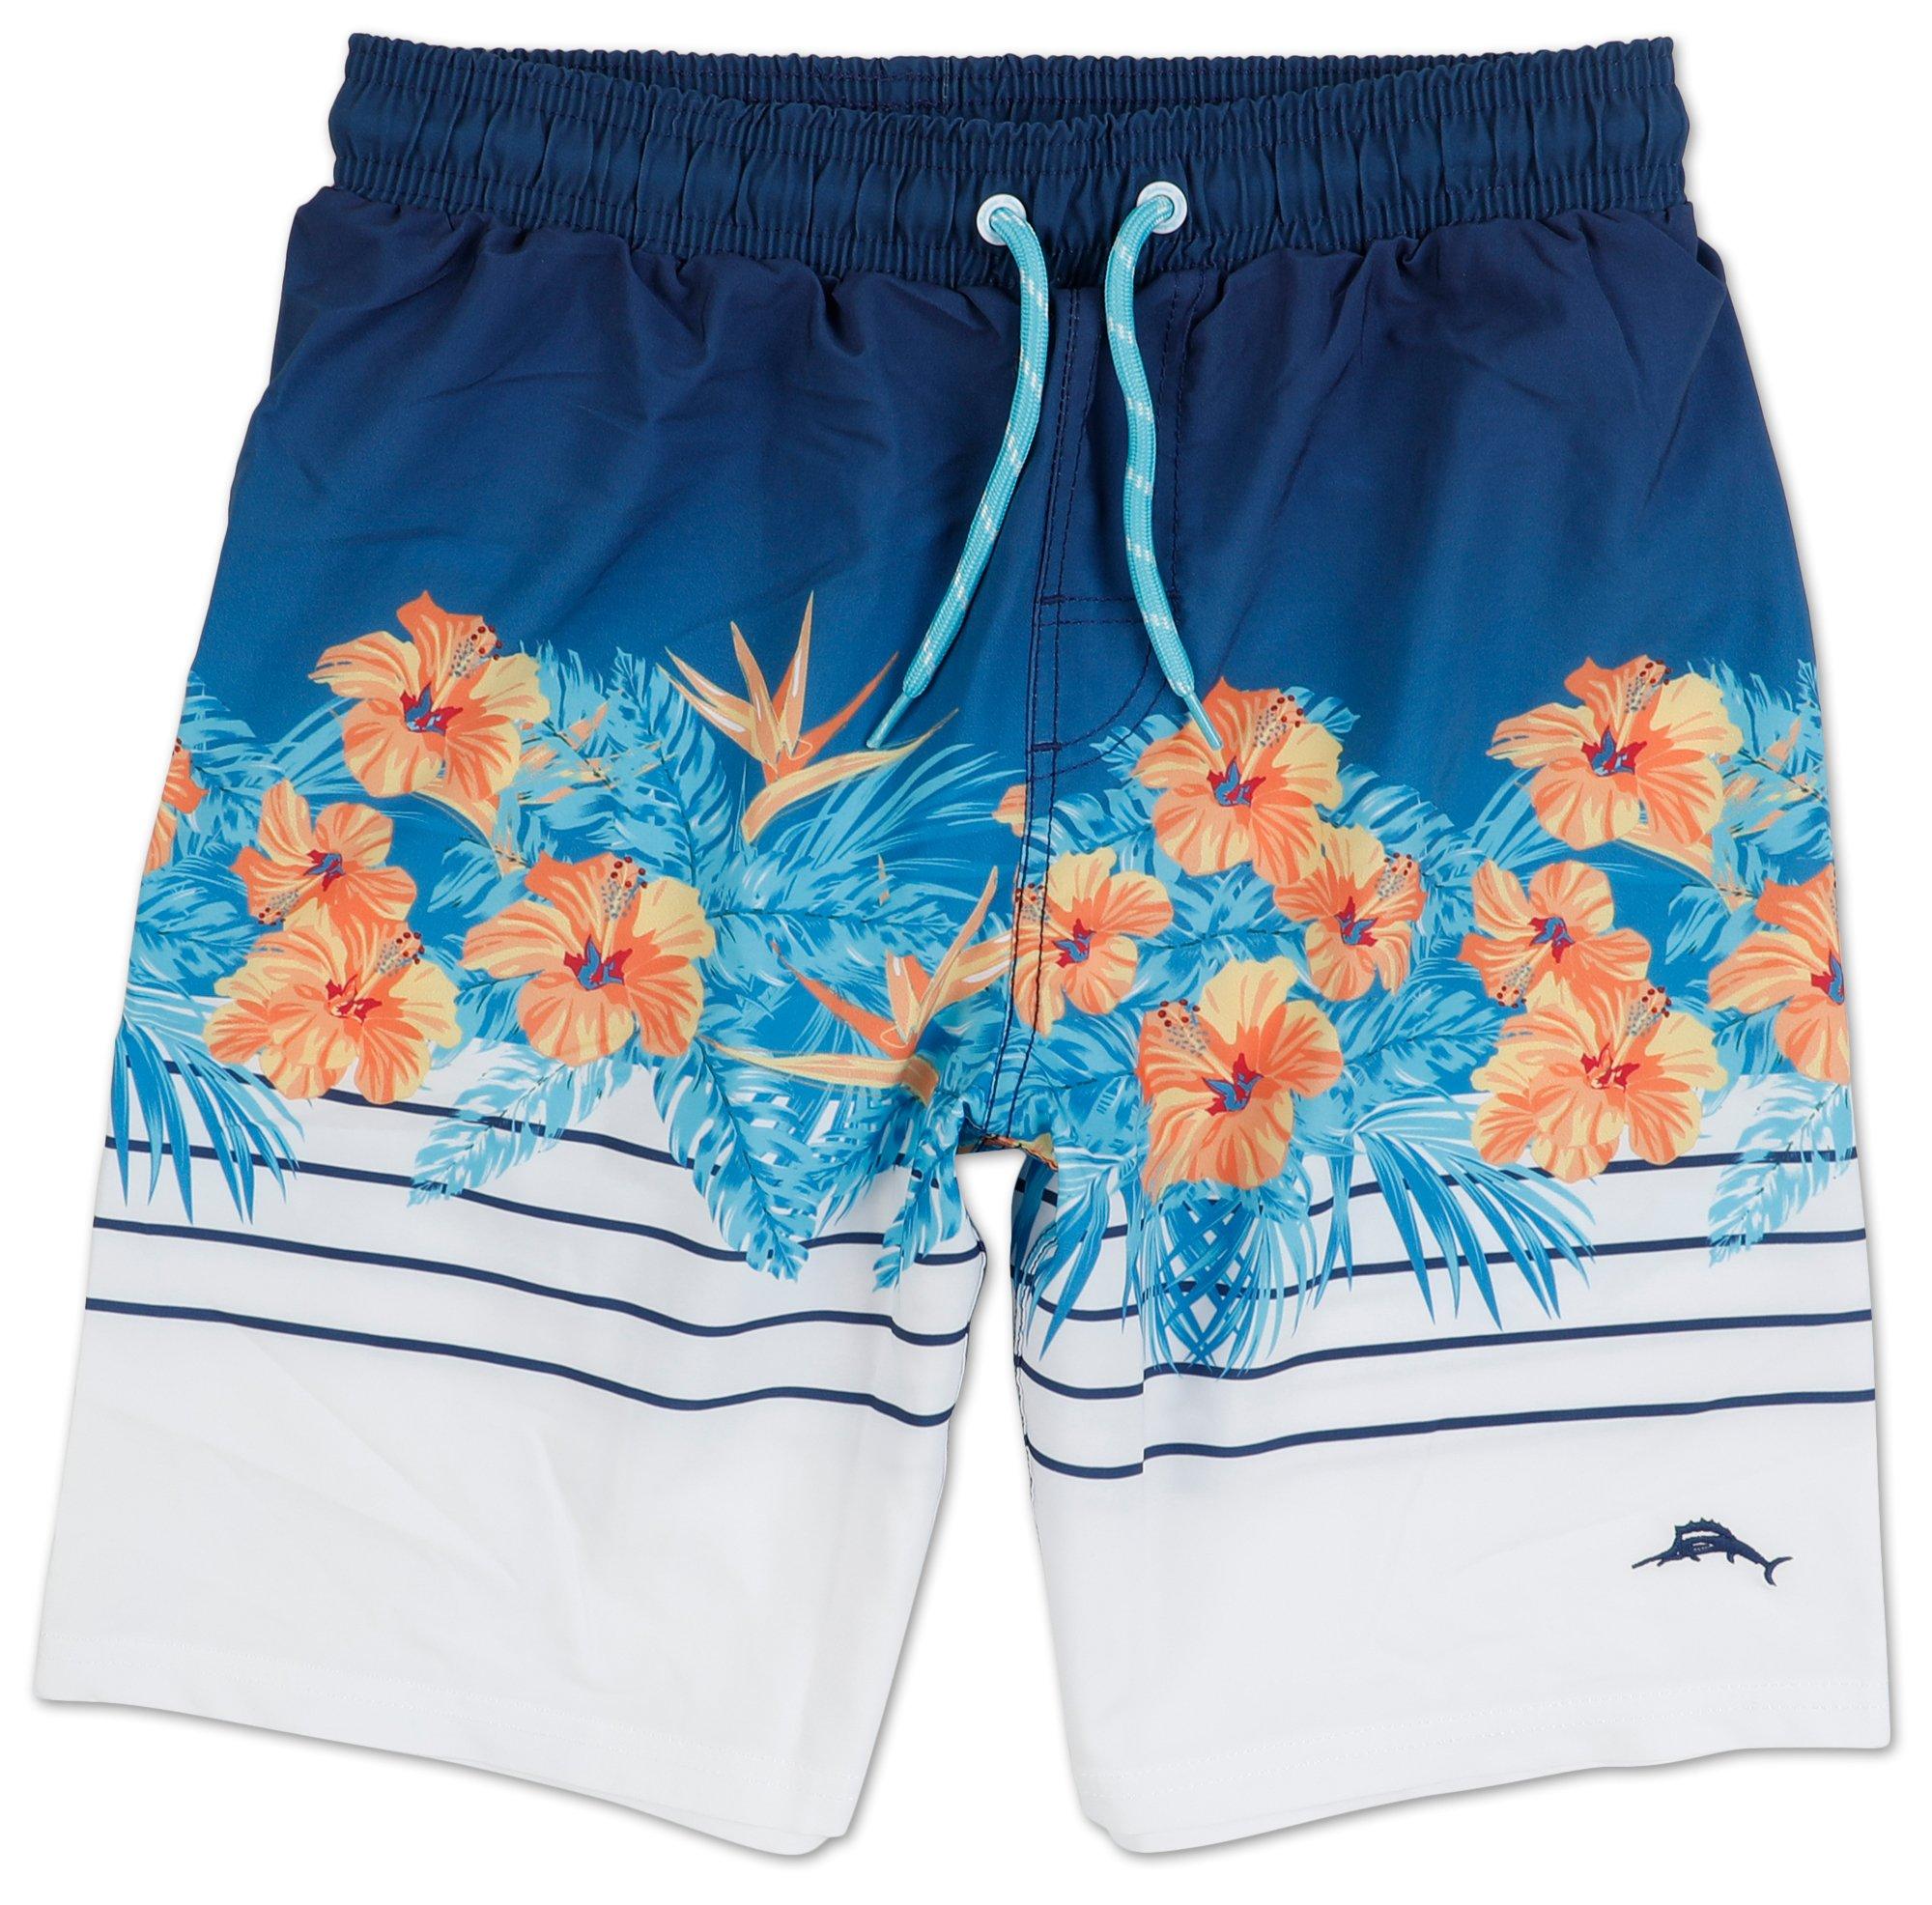 Boys Stripe Floral Swim Shorts